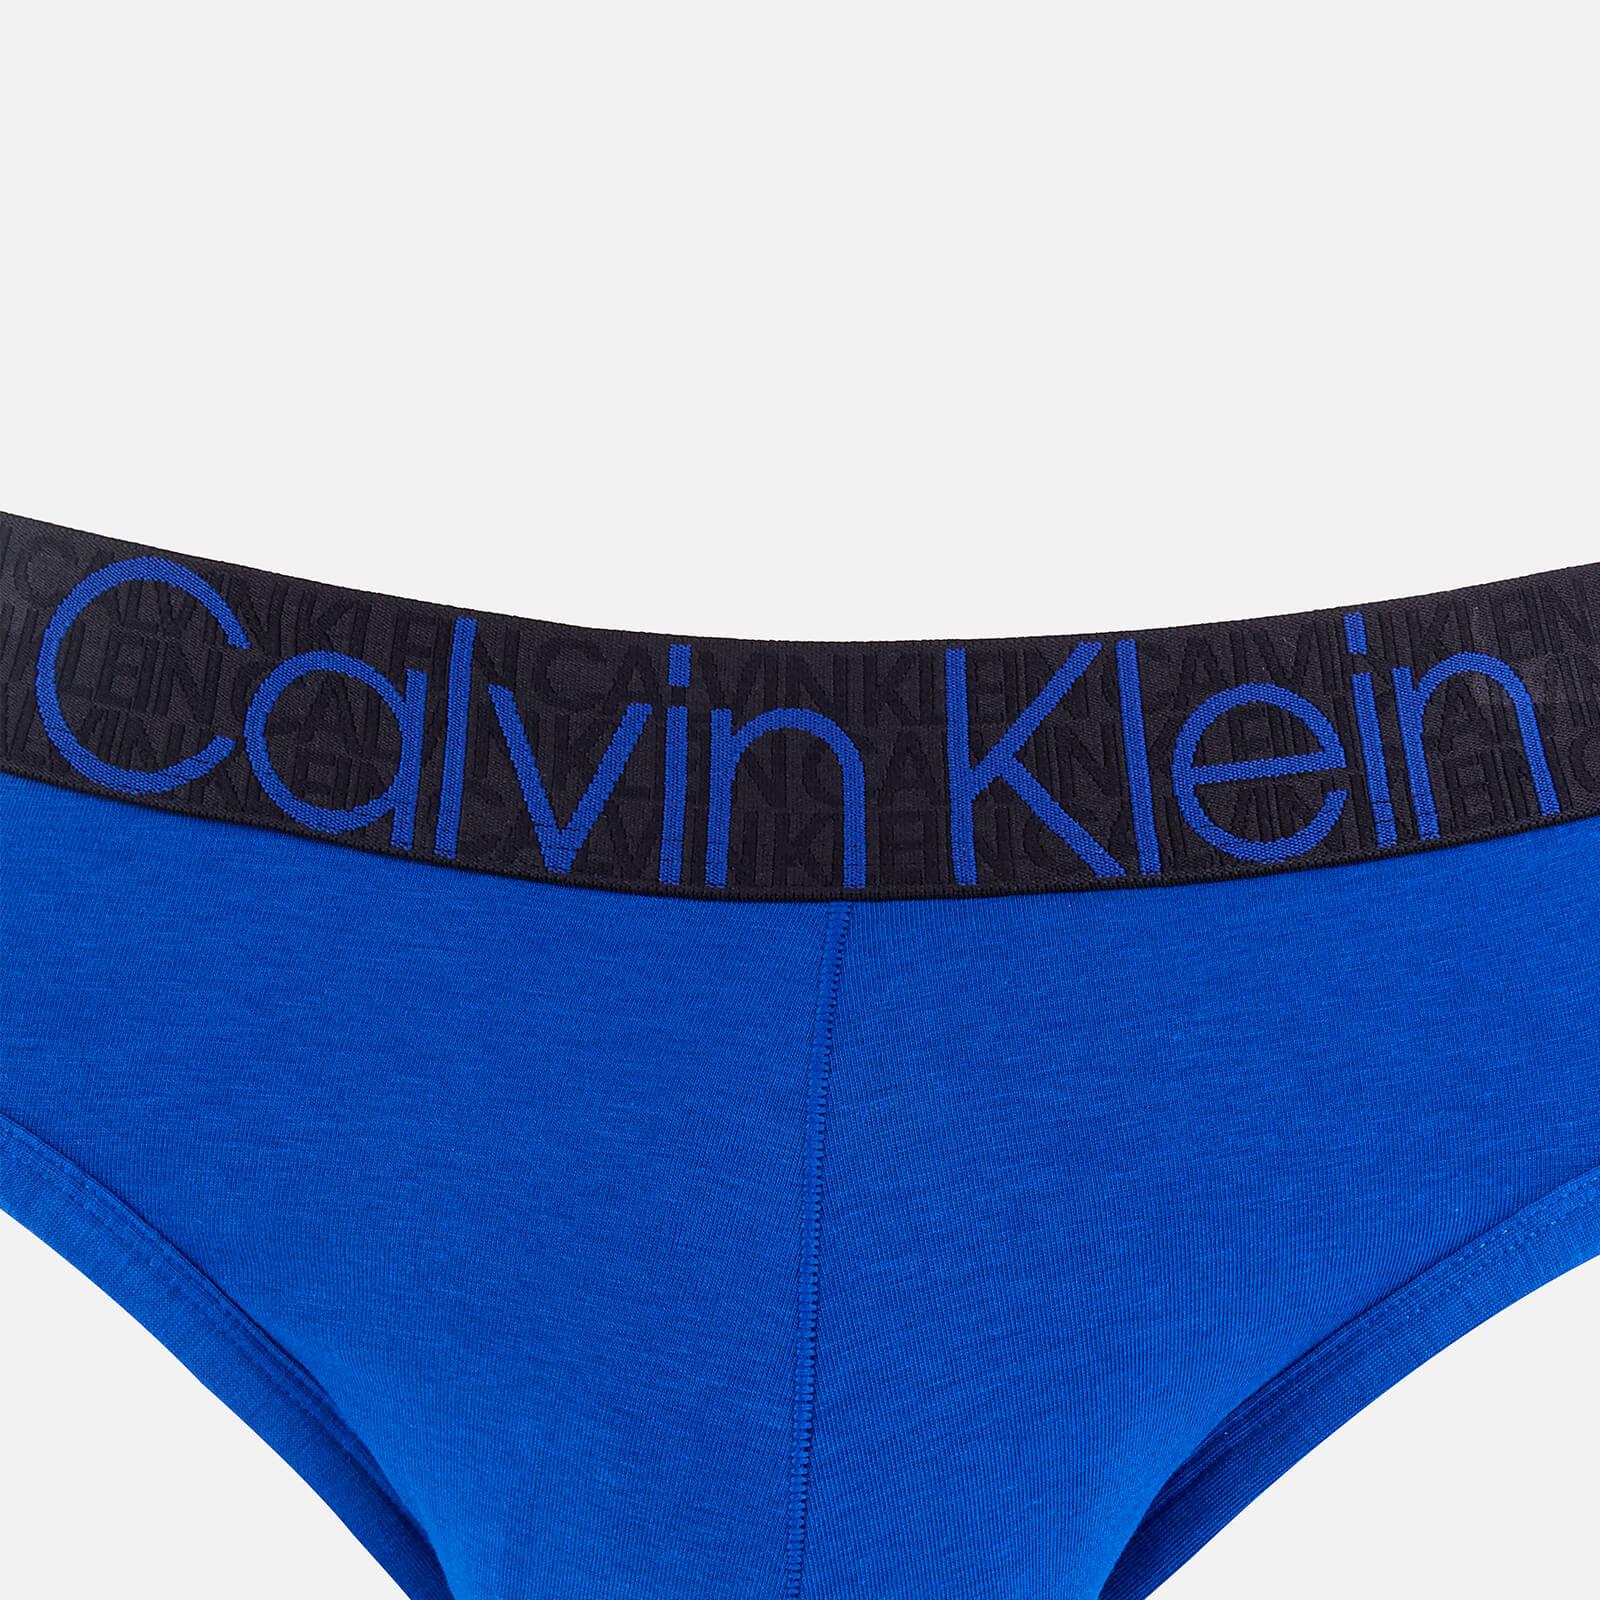 Calvin Klein Contour Pouch Briefs in Blue for Men